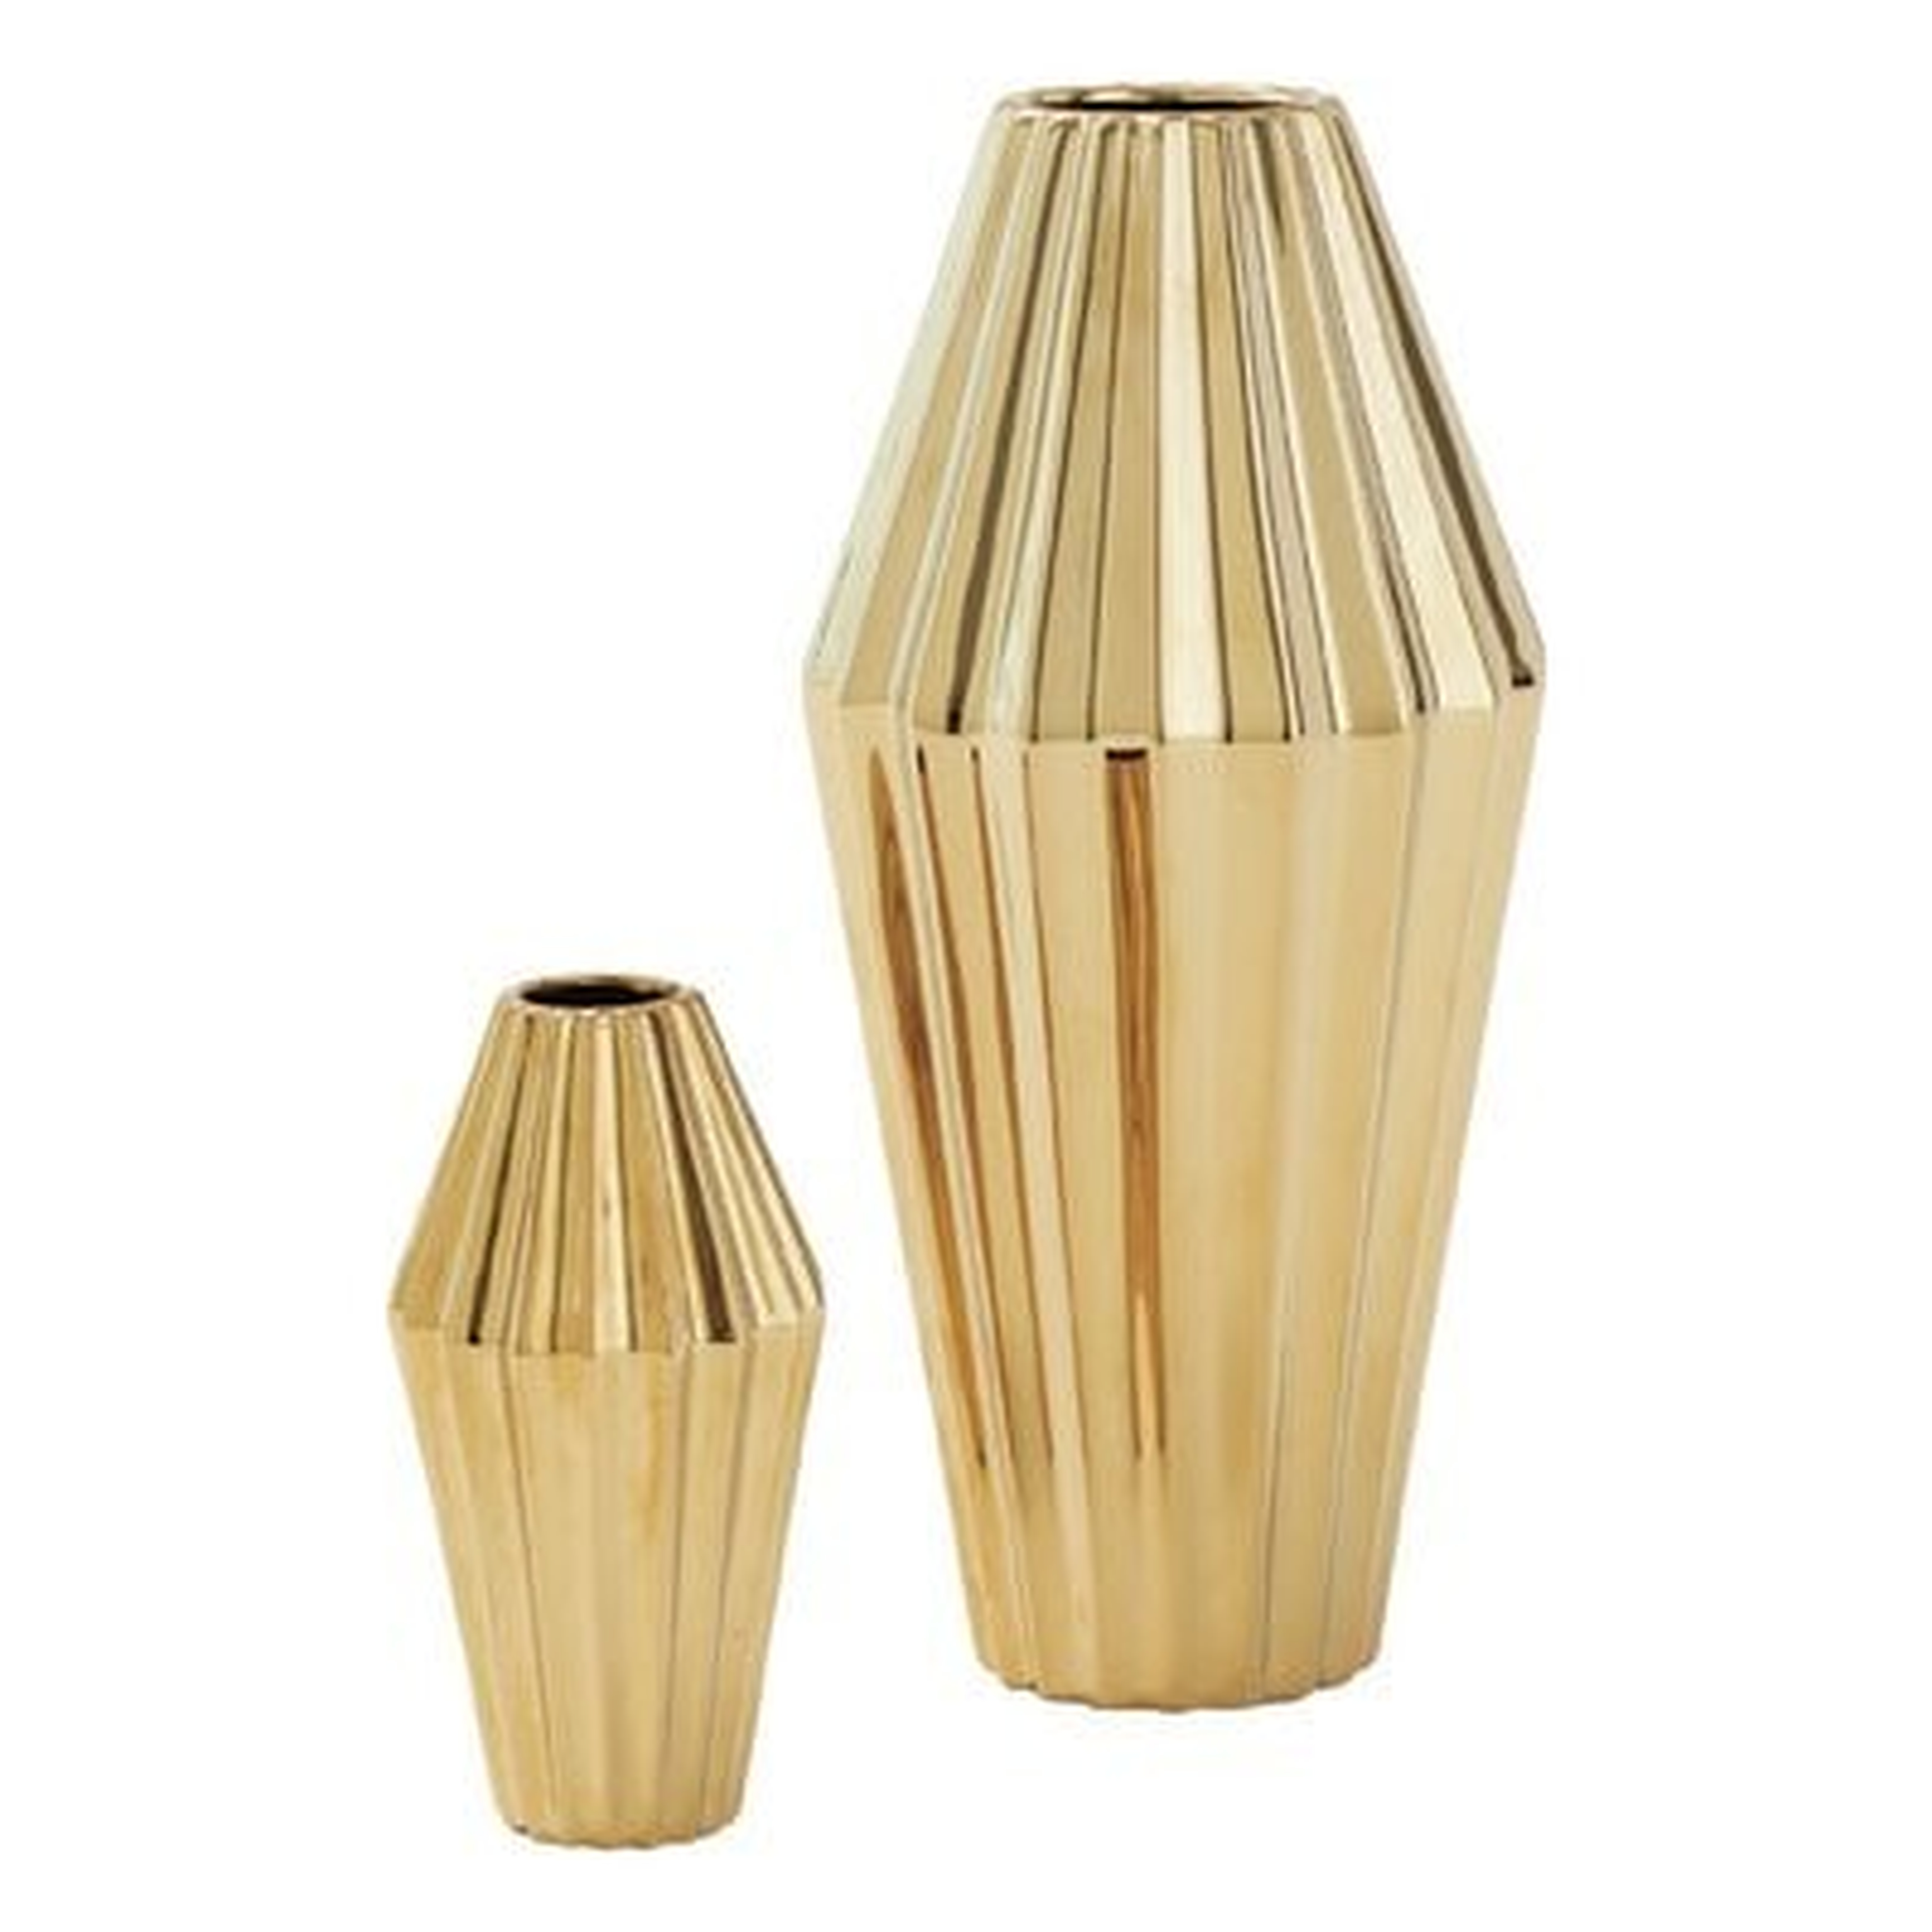 Moana Large Ceramic Vase - Gold, 6" H - Wayfair